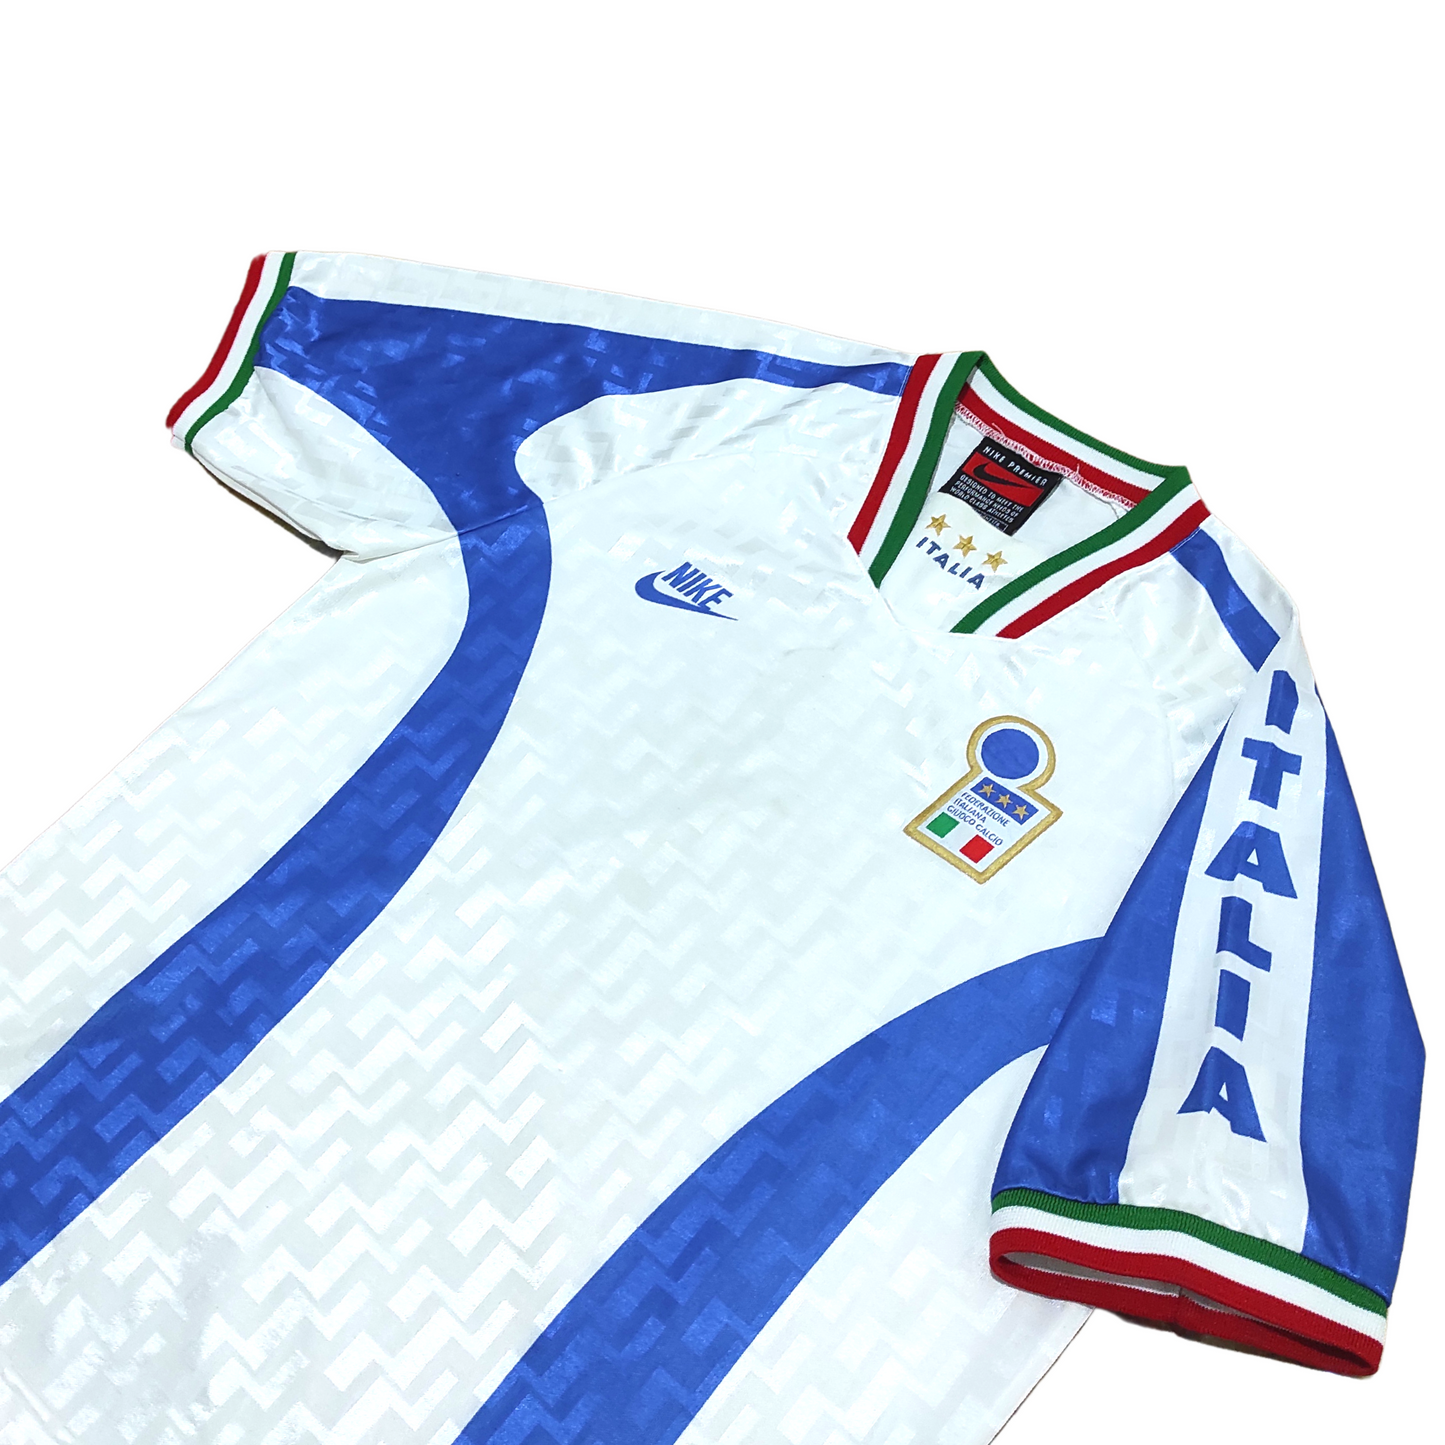 Italy Training Shirt1996-1997 (M)